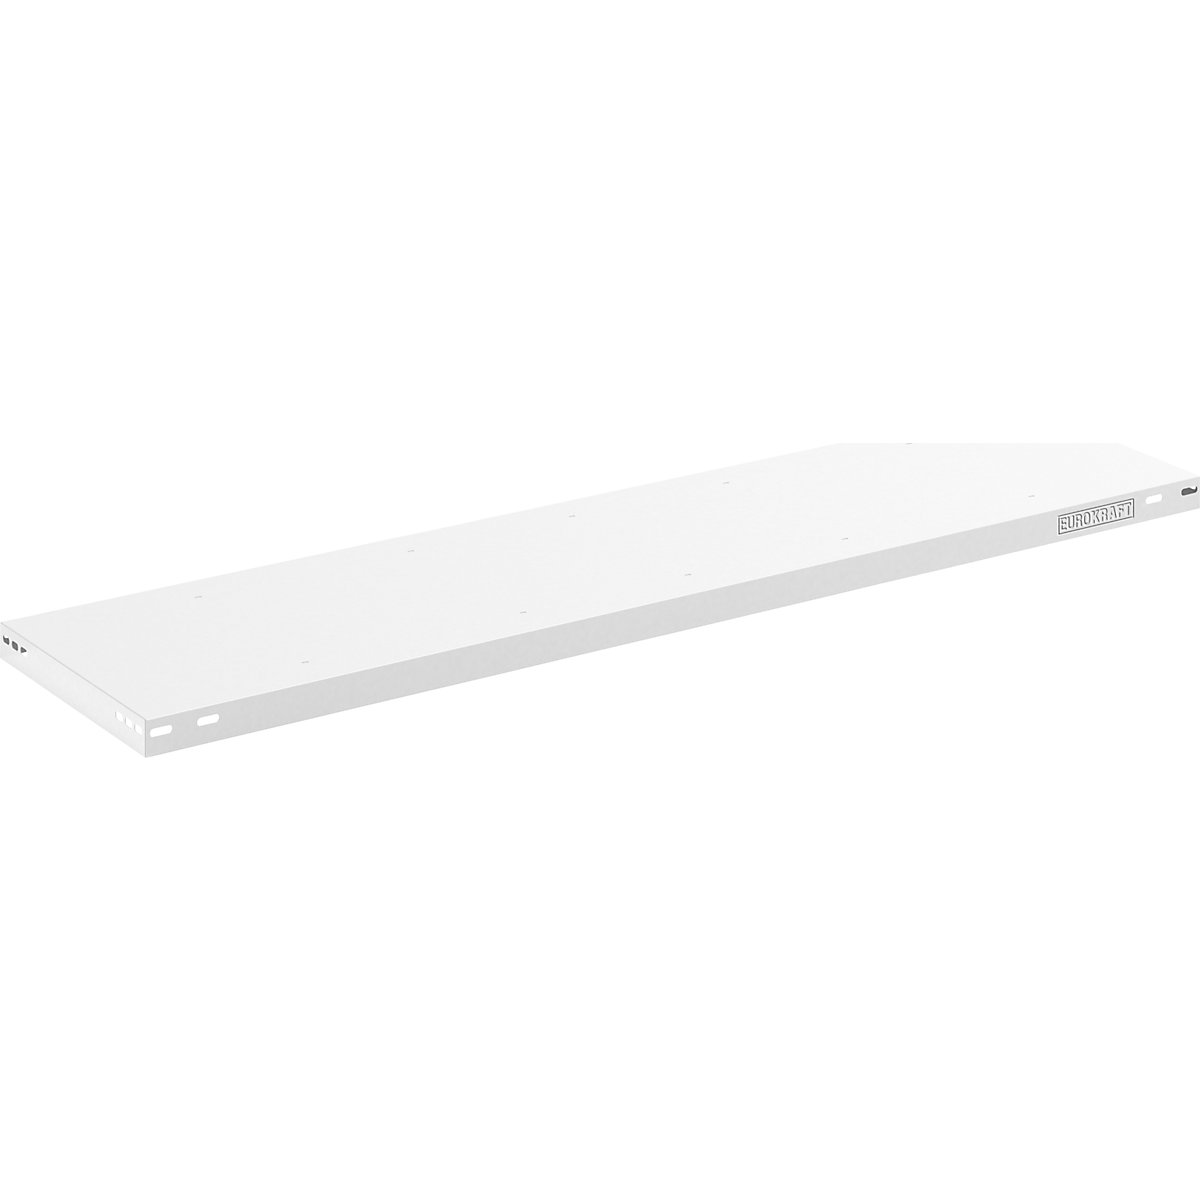 Shelf – eurokraft pro, plastic-coated, WxD 1300 x 400 mm